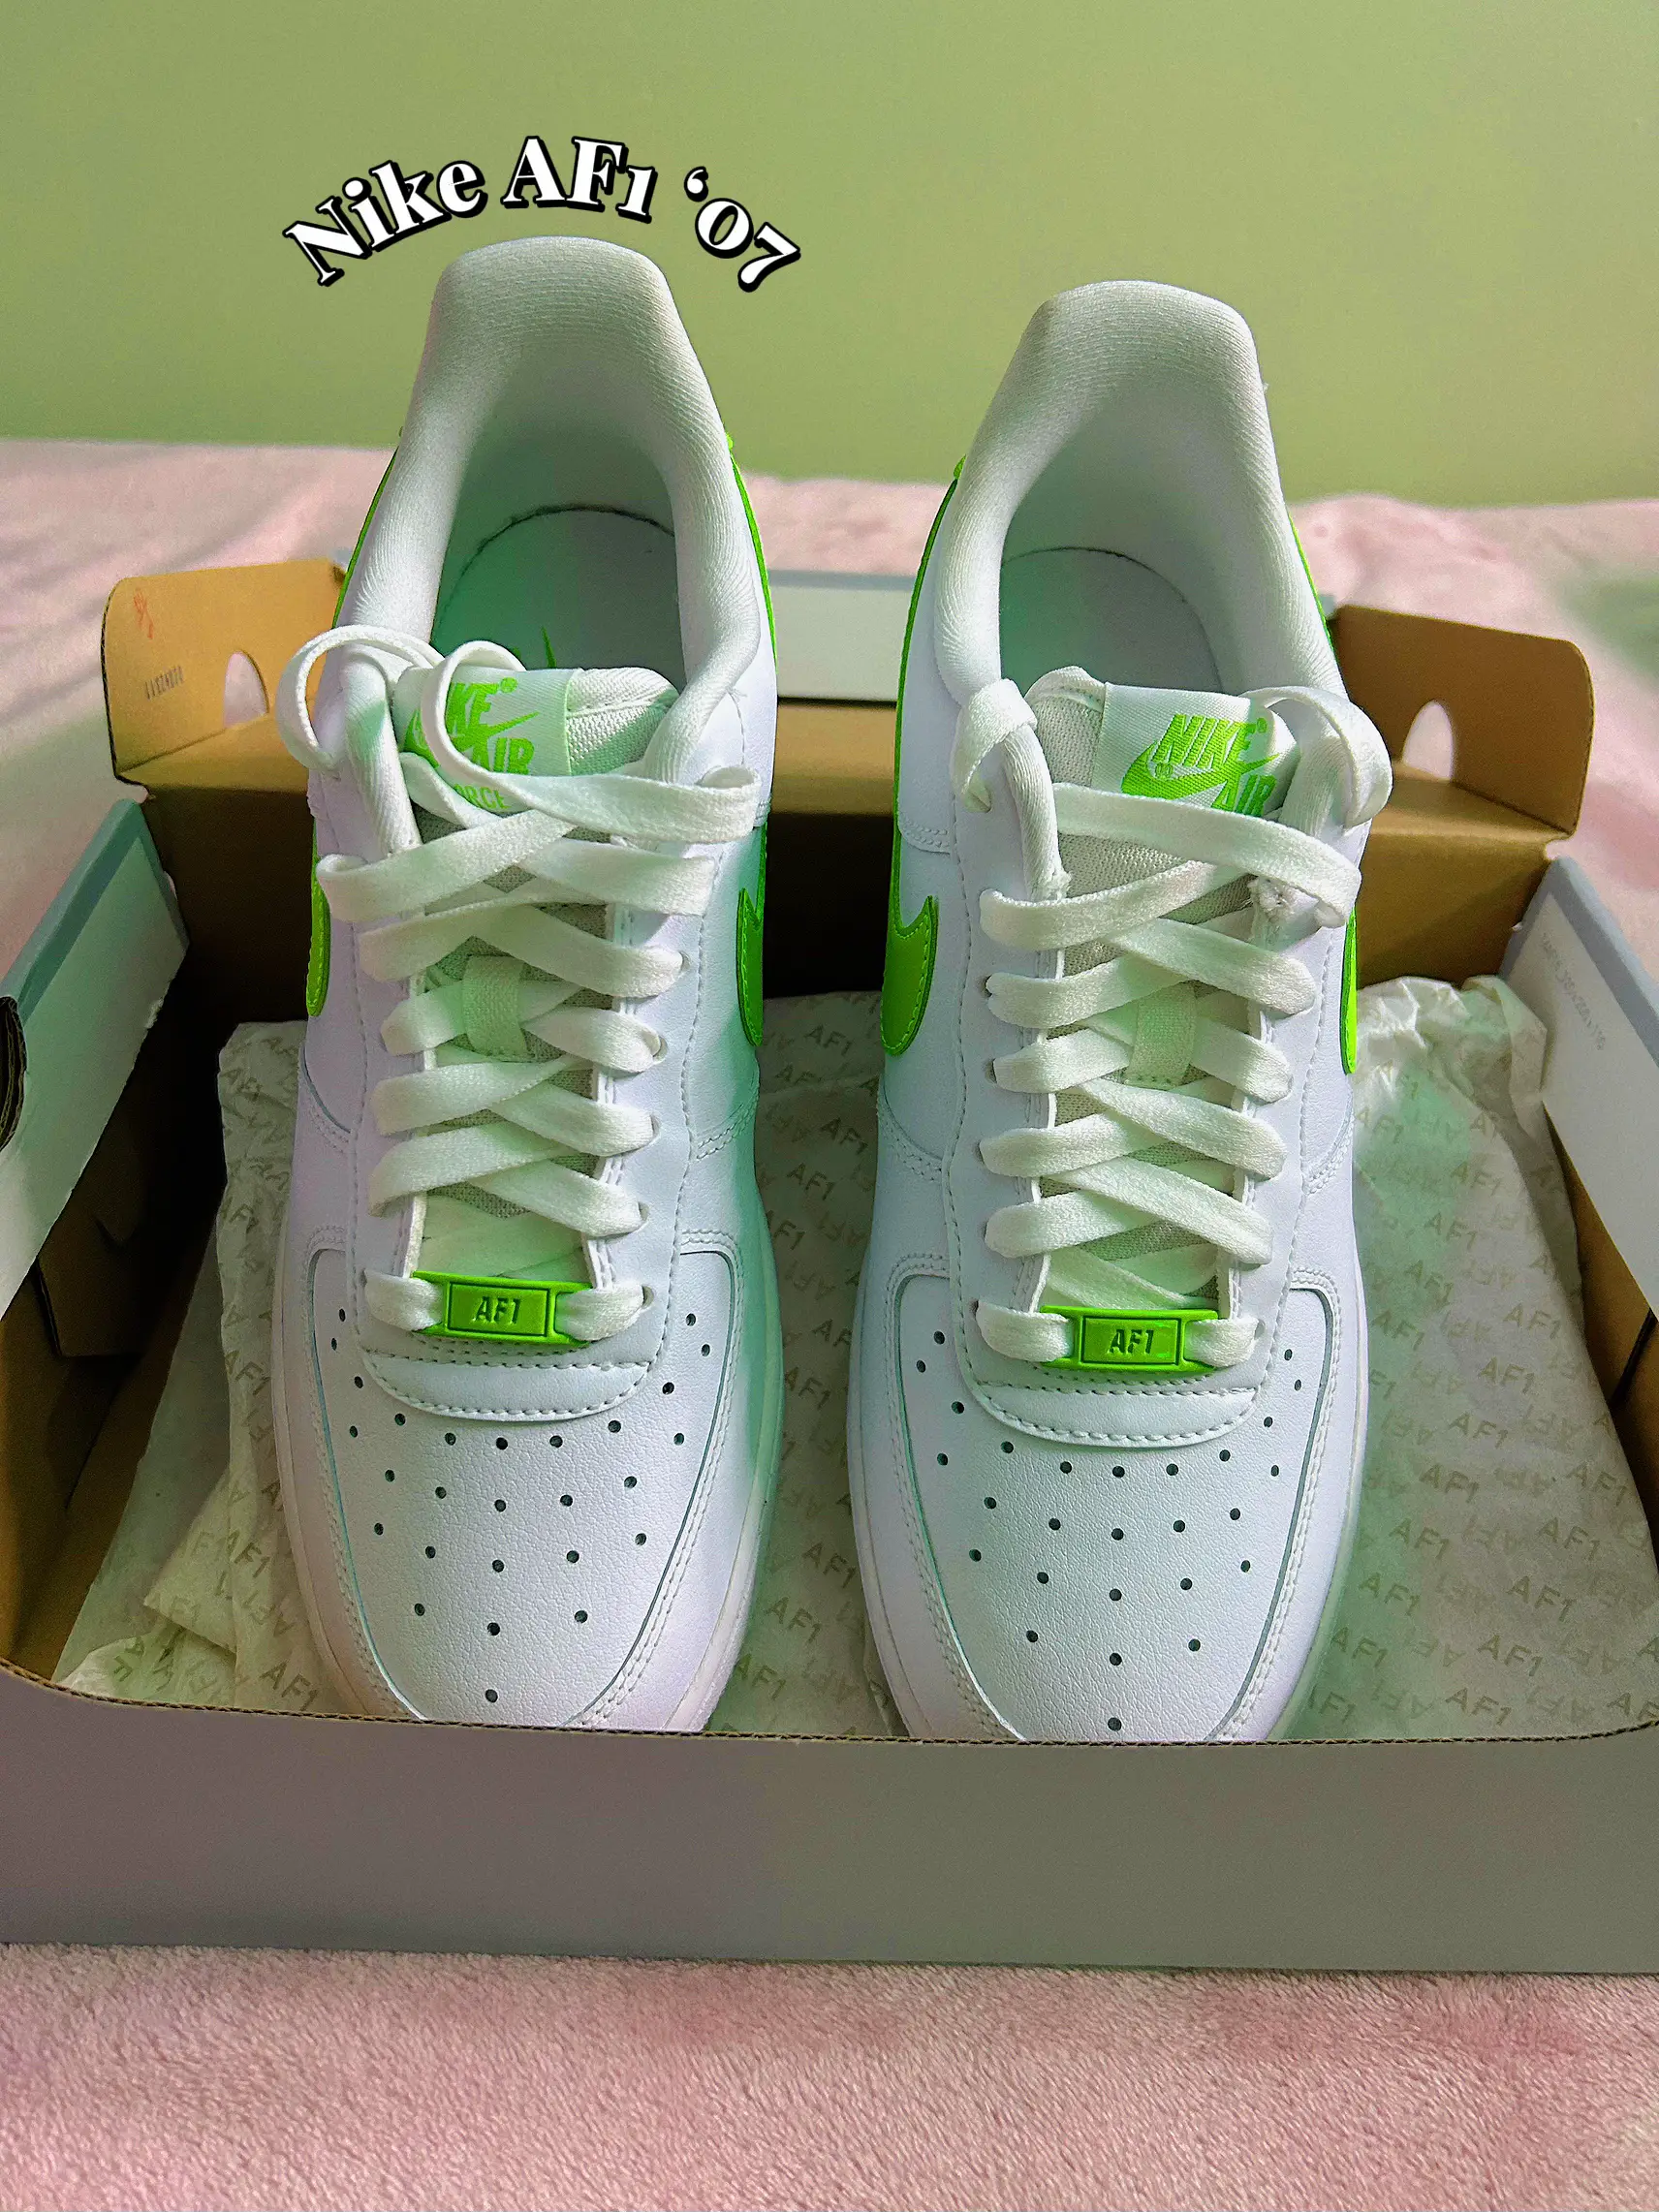 SneakerAlert on X: Wmns Nike Air Force 1 High Sculpt 'White